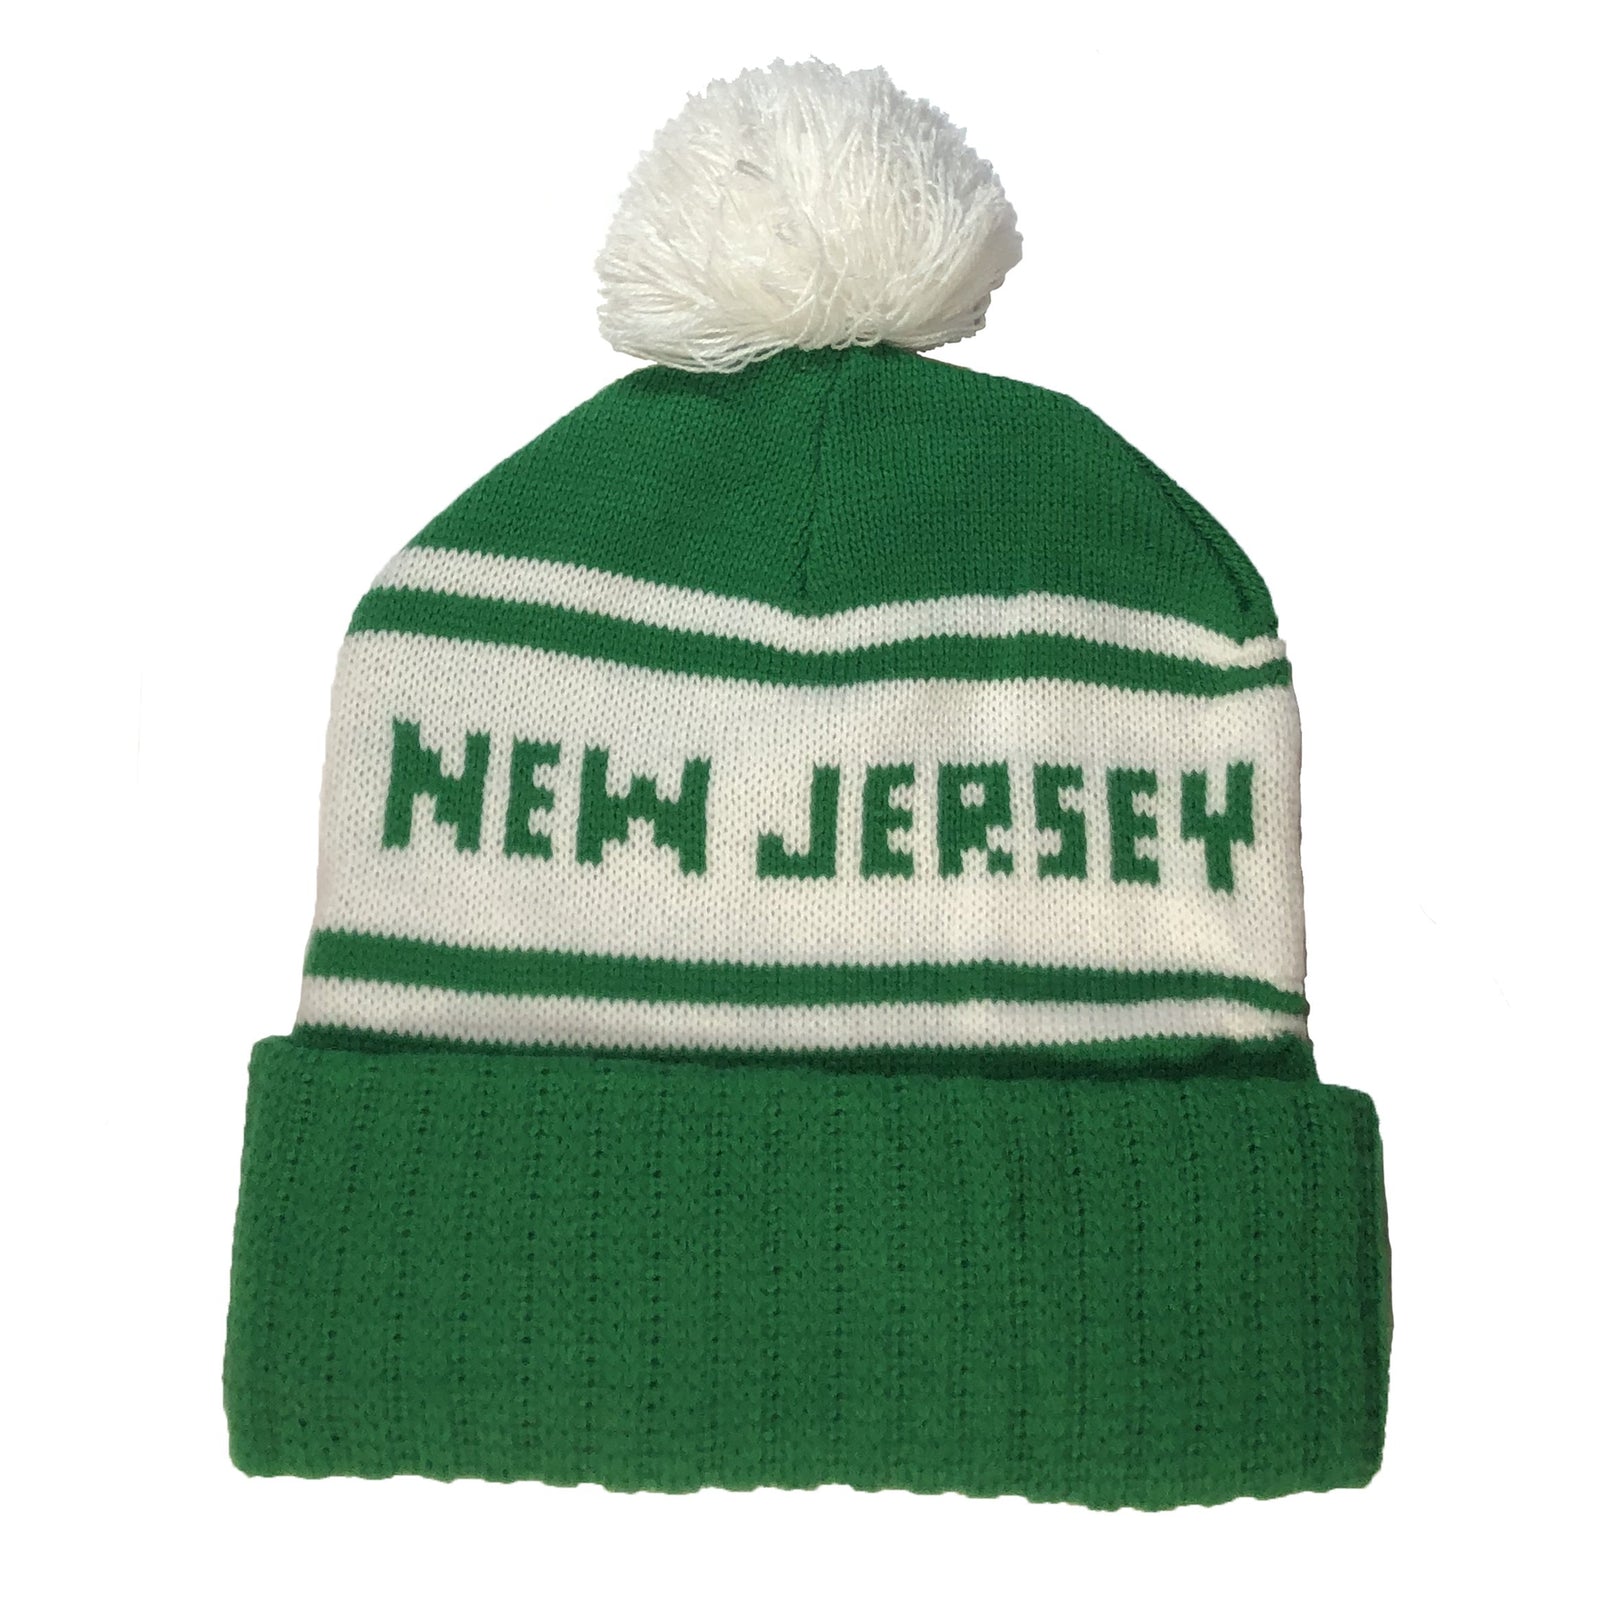 Vintage New Jersey Winter Pom Pom Hat | Cool Retro Knit Garden State Beanie | Solid Threads